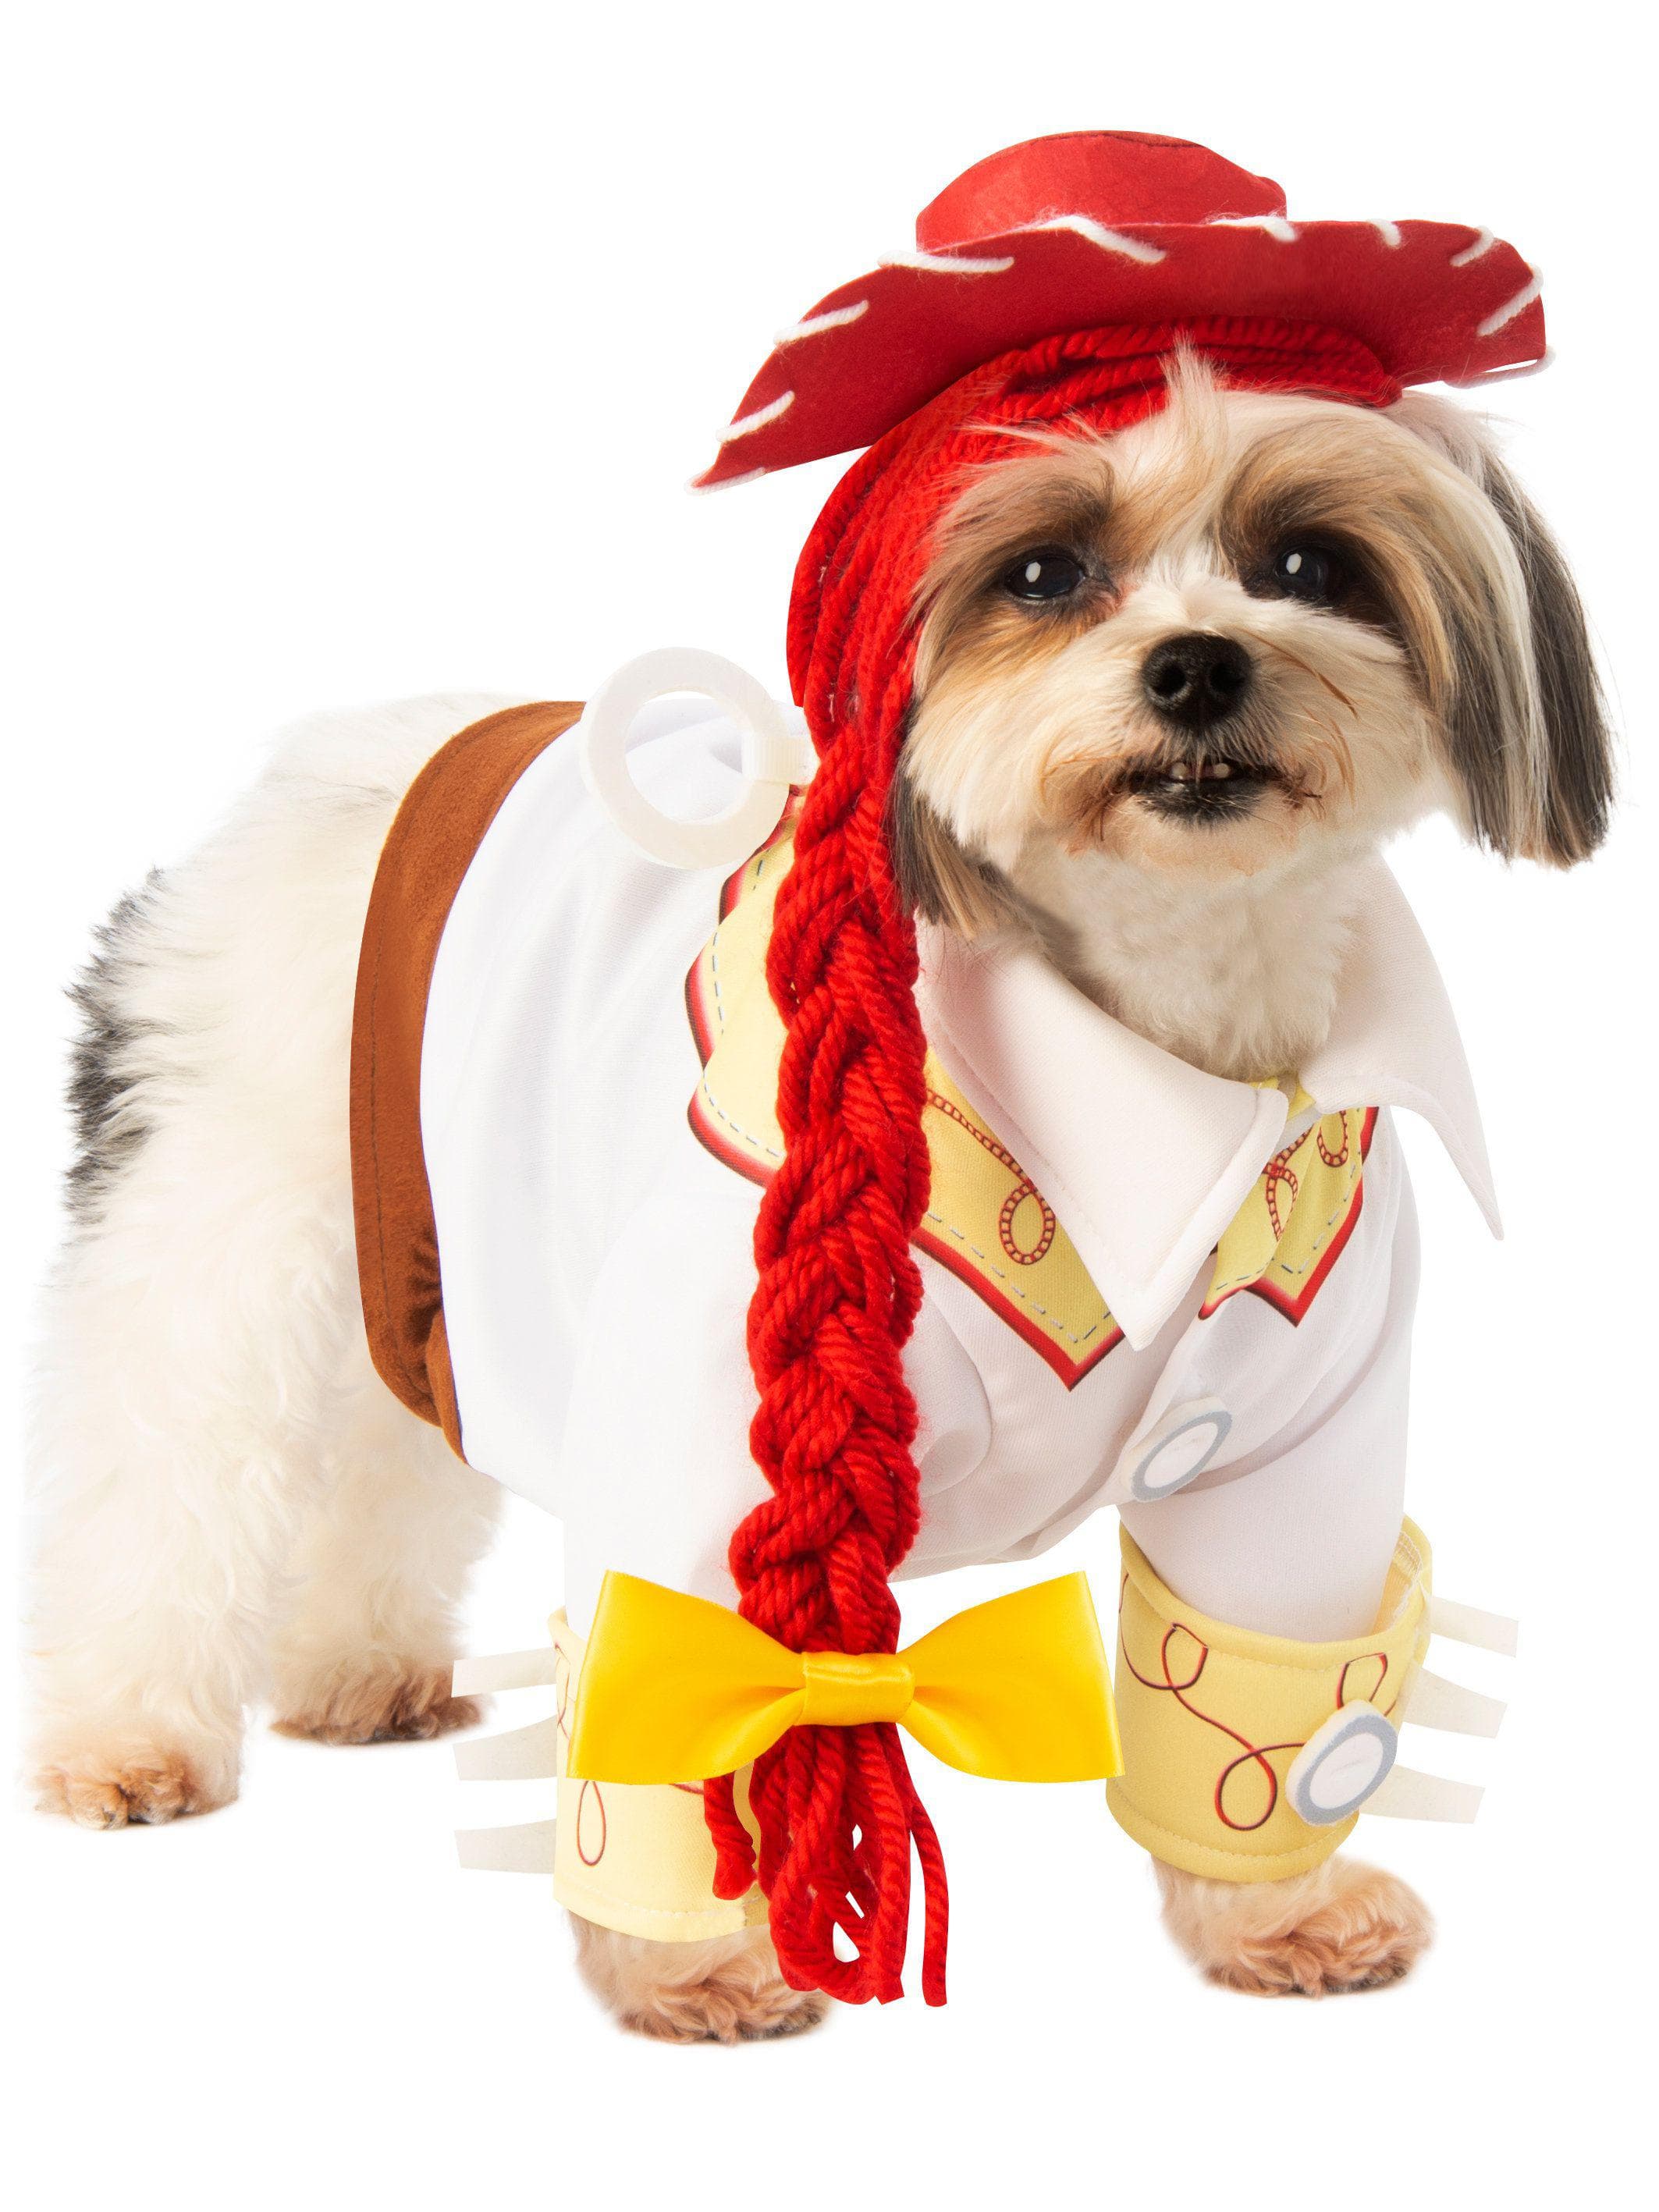 Toy Story Jessie Pet Costume - costumes.com